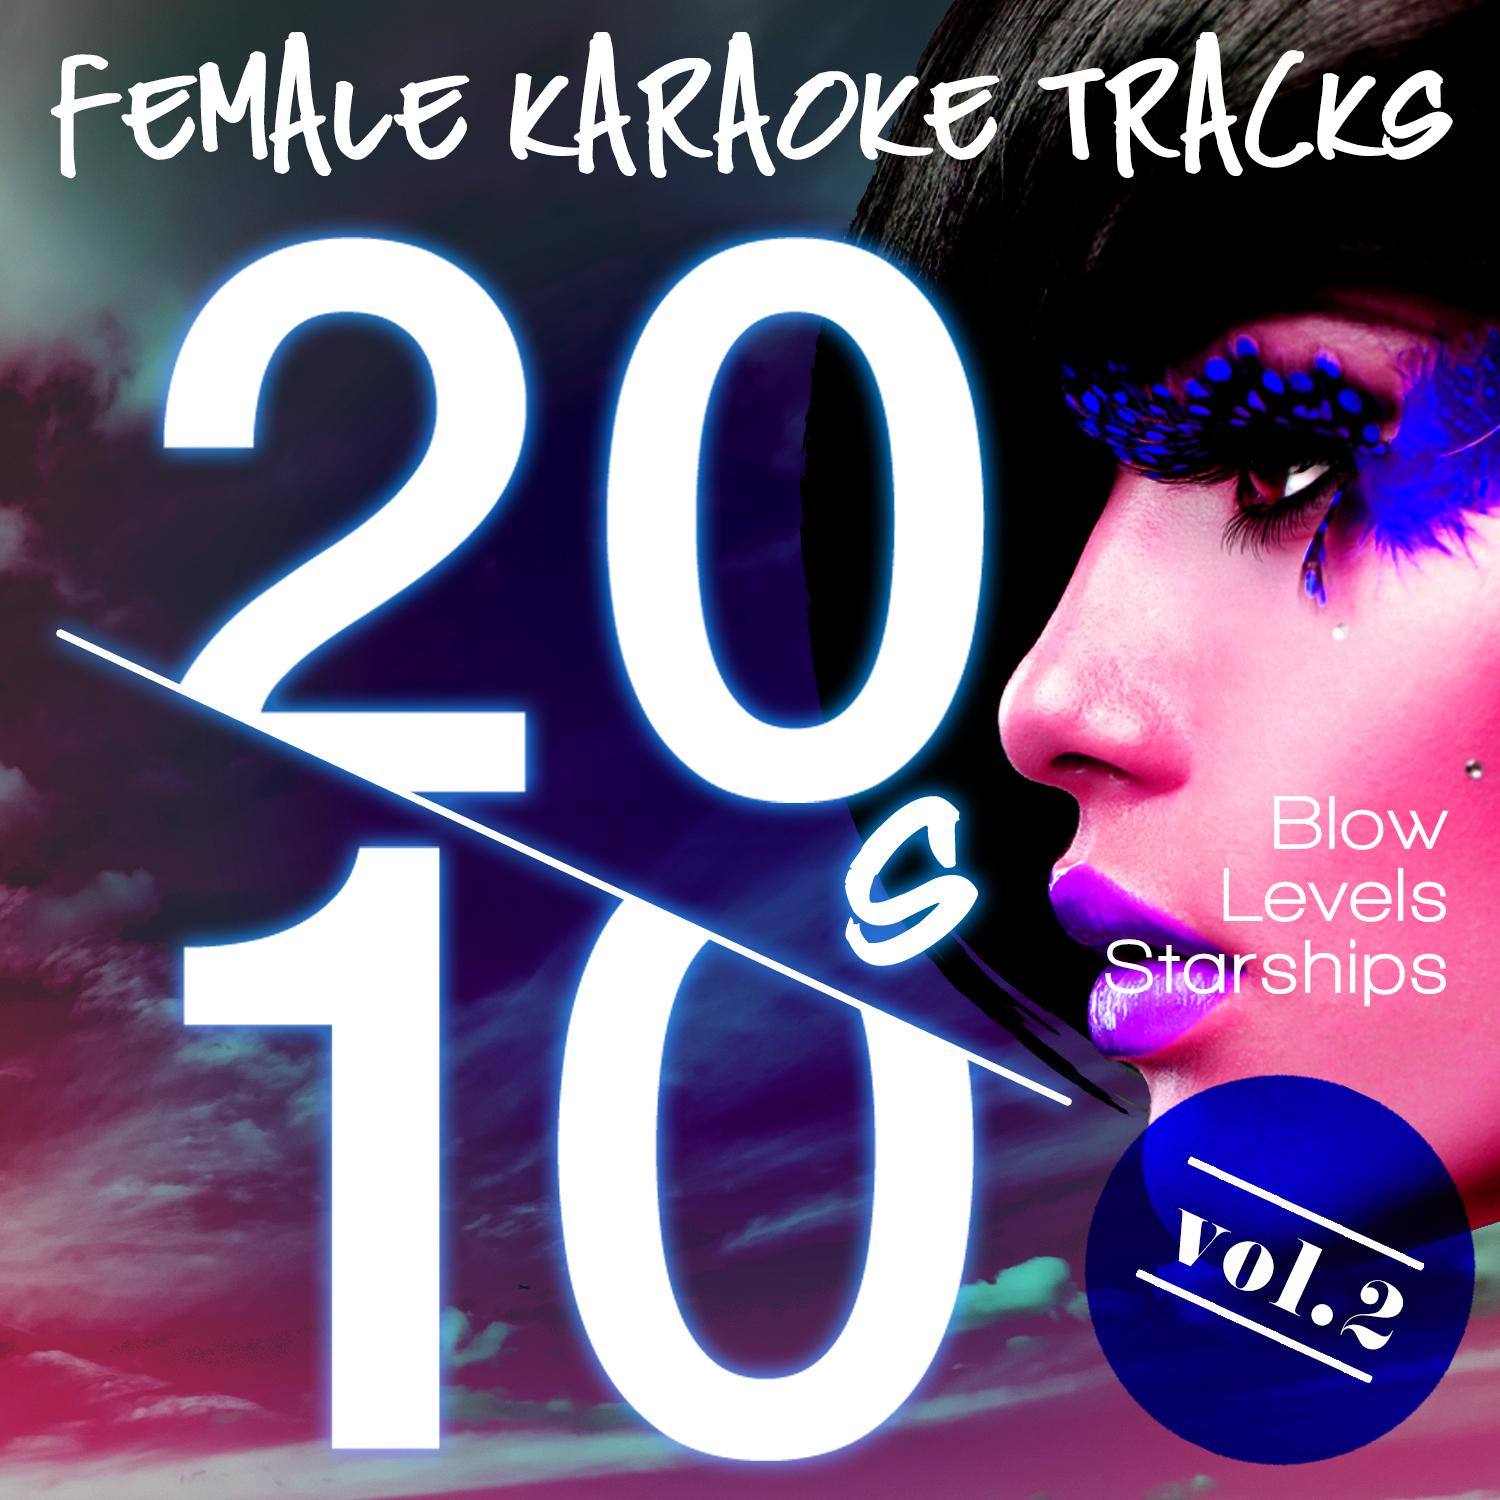 Female Karaoke Tracks - 2010's, Vol. 2